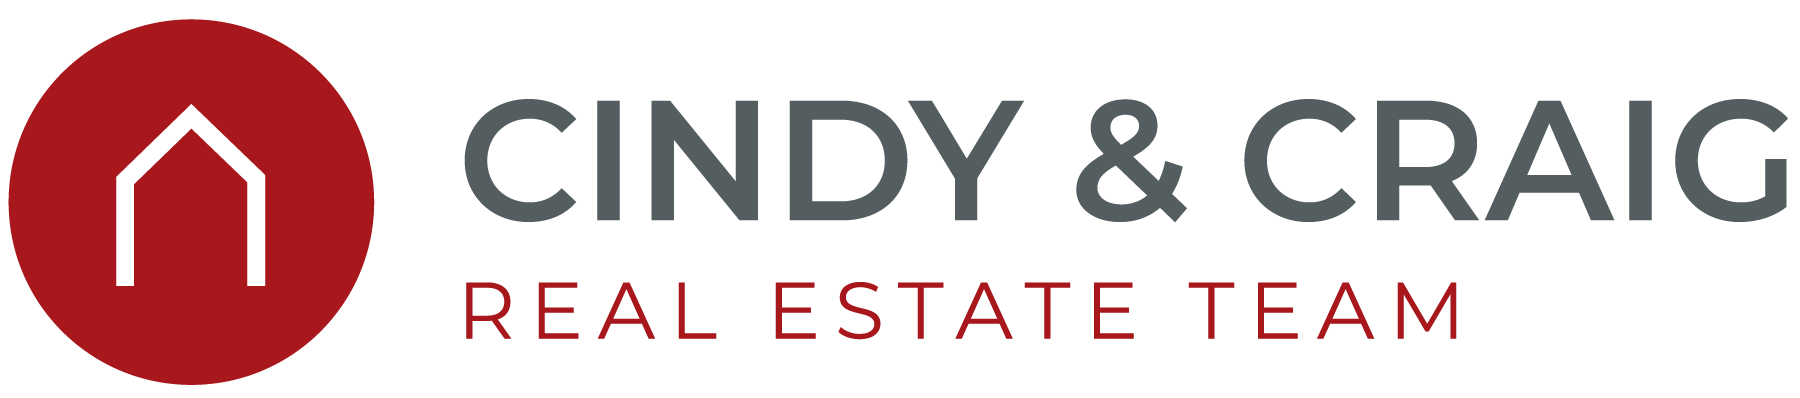 Cindy & Craig Real Estate